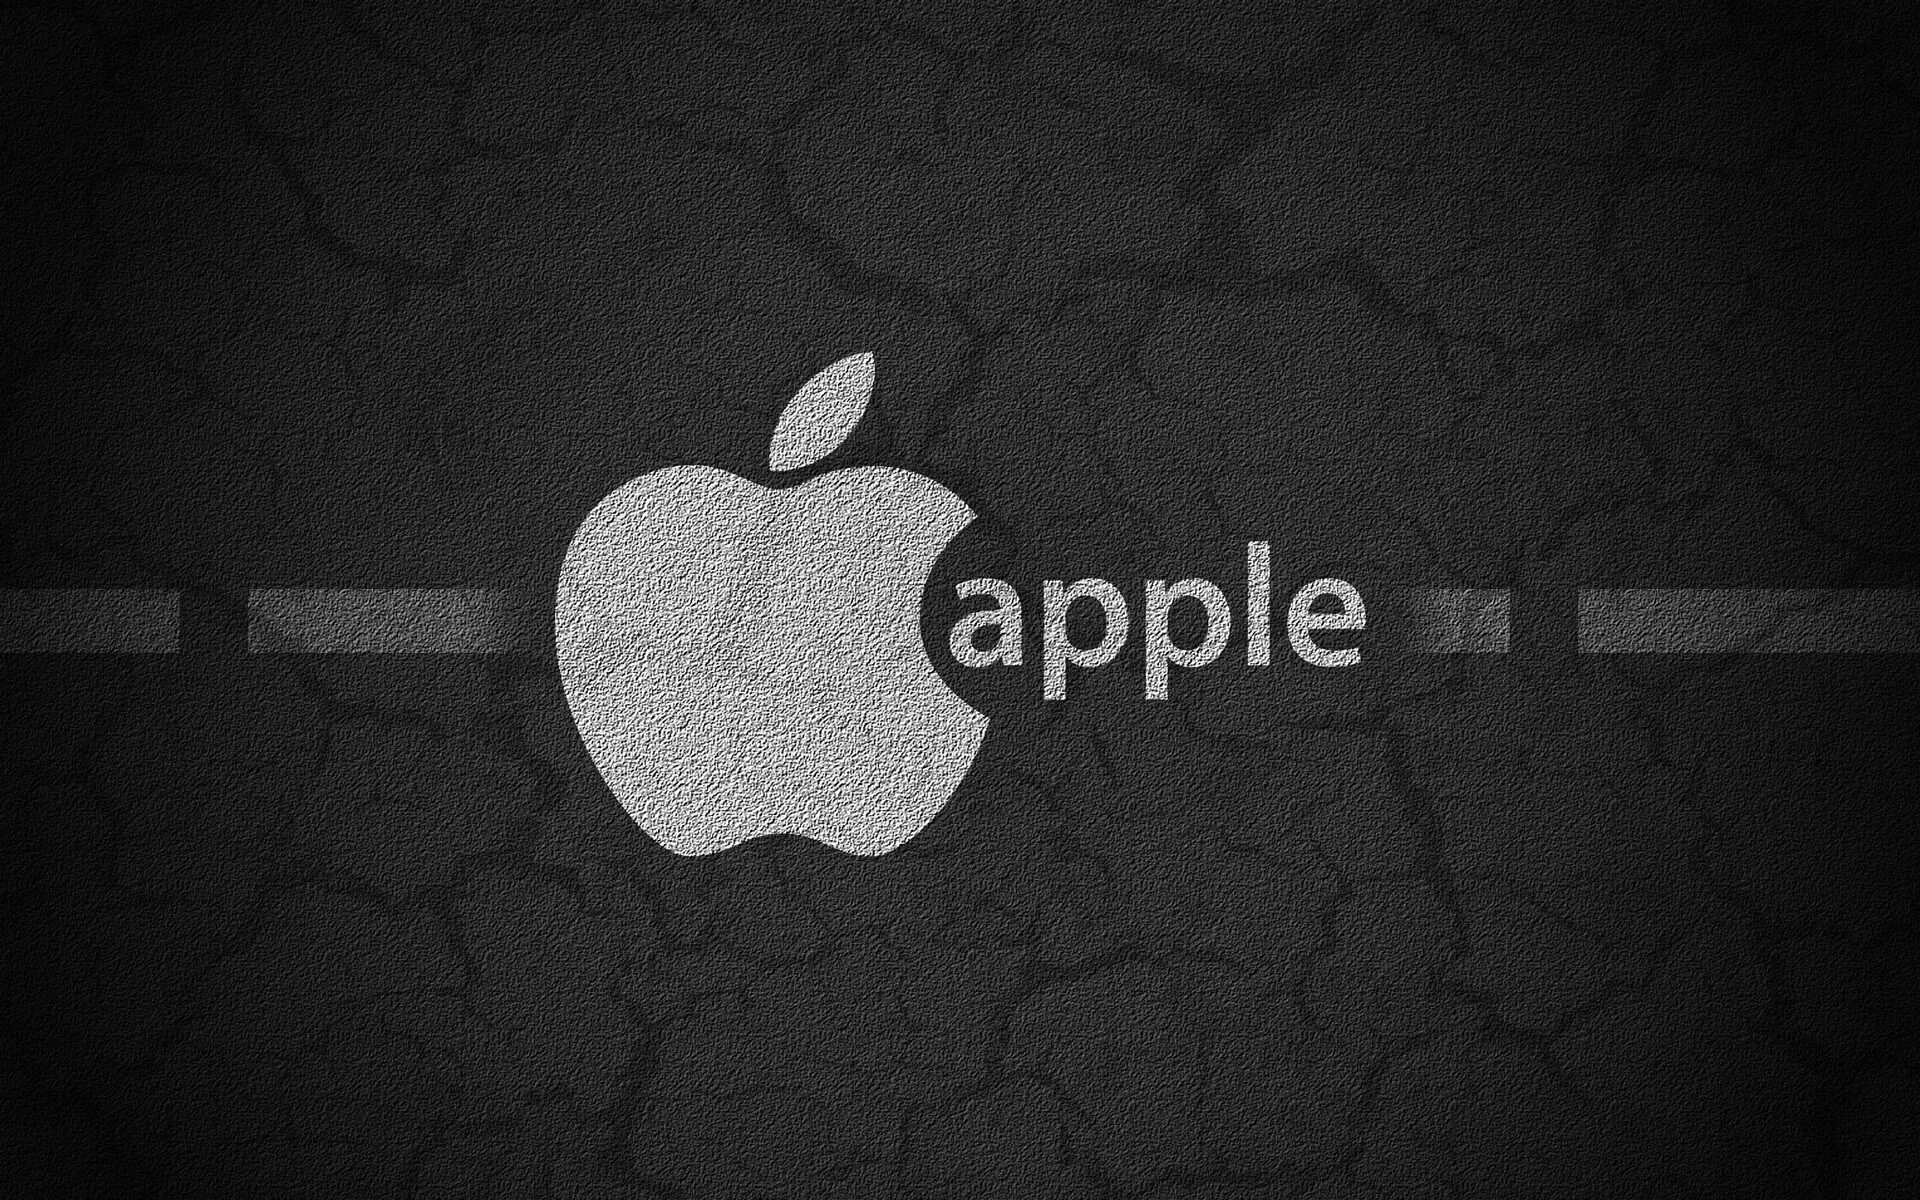 Обои эппл. Обои на рабочий стол Apple. Фон в стиле Apple. Красивый логотип Эппл. Логотип Apple на черном фоне.